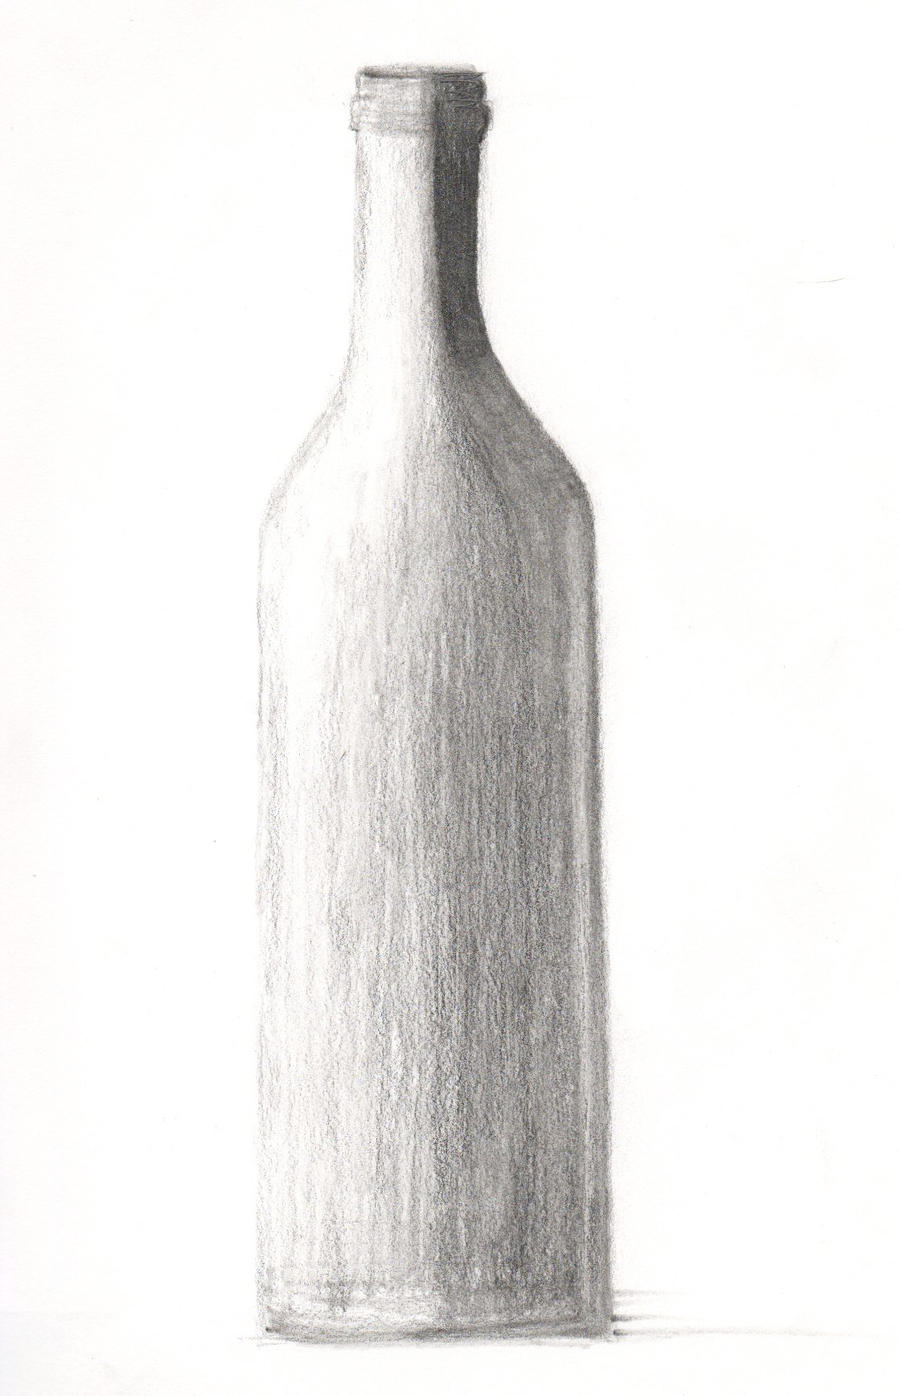 Drawing 101 - Wine Bottle 1 by xycolsen on DeviantArt